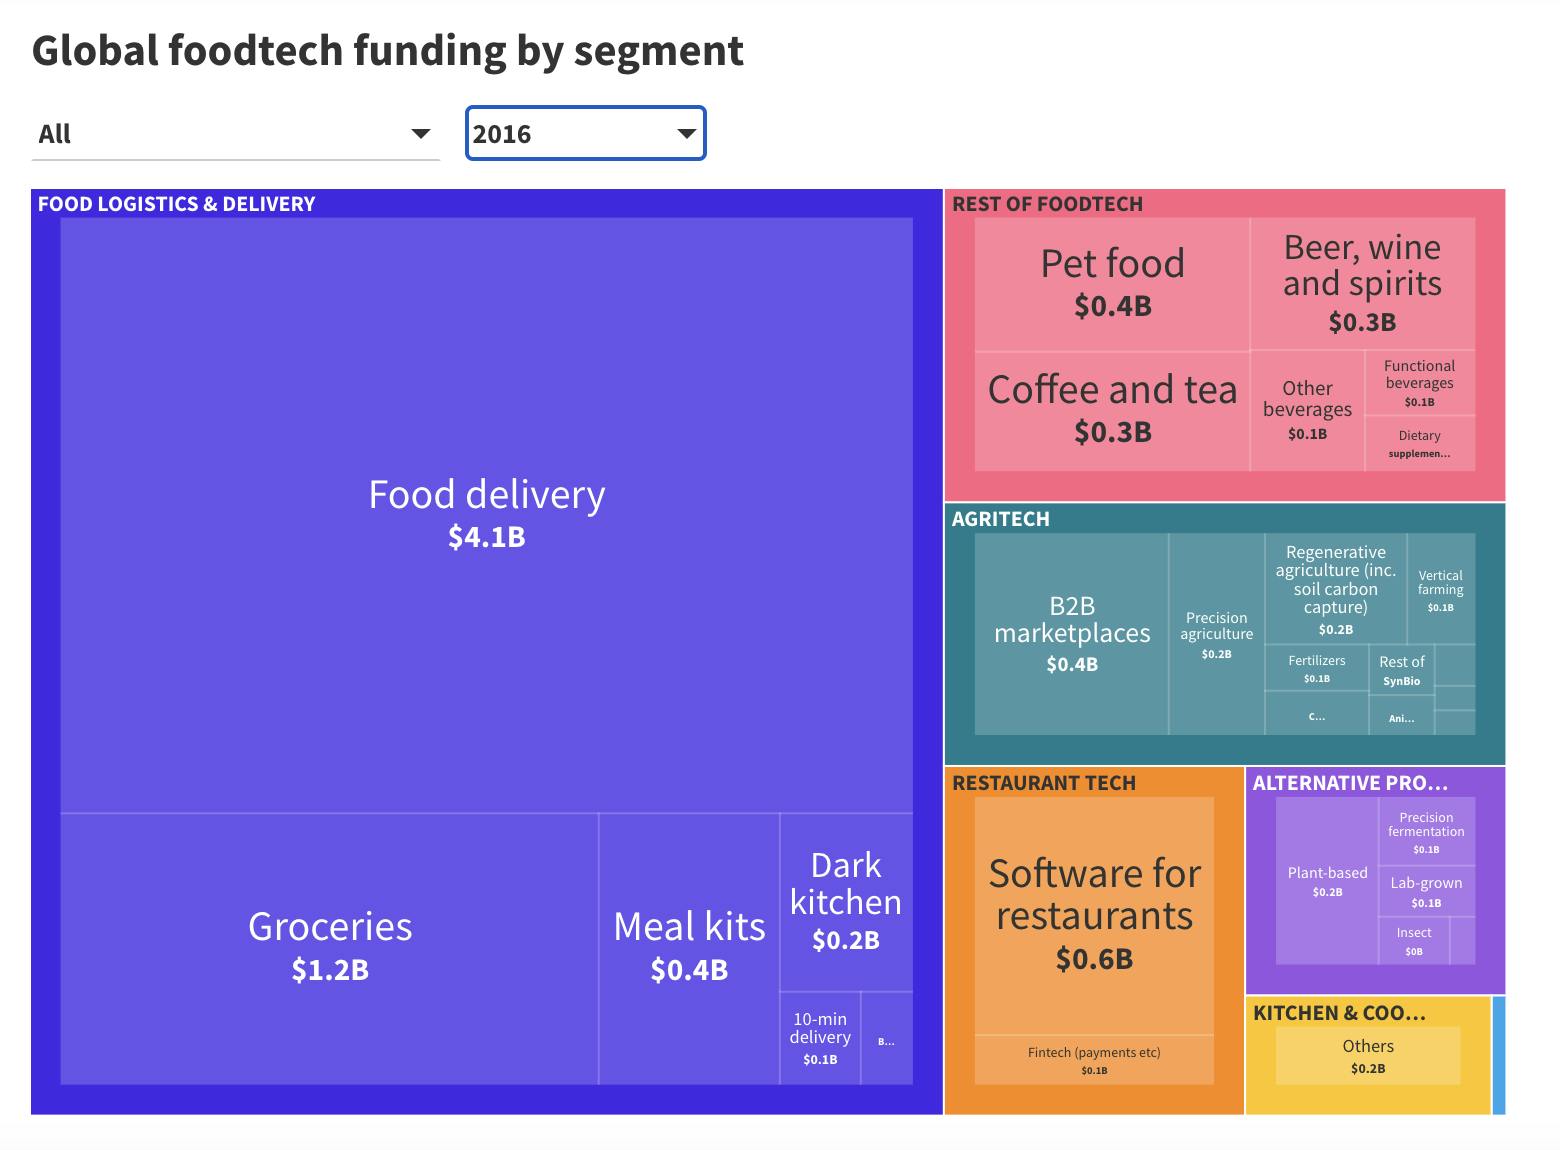 Global foodtech by segment, 2016